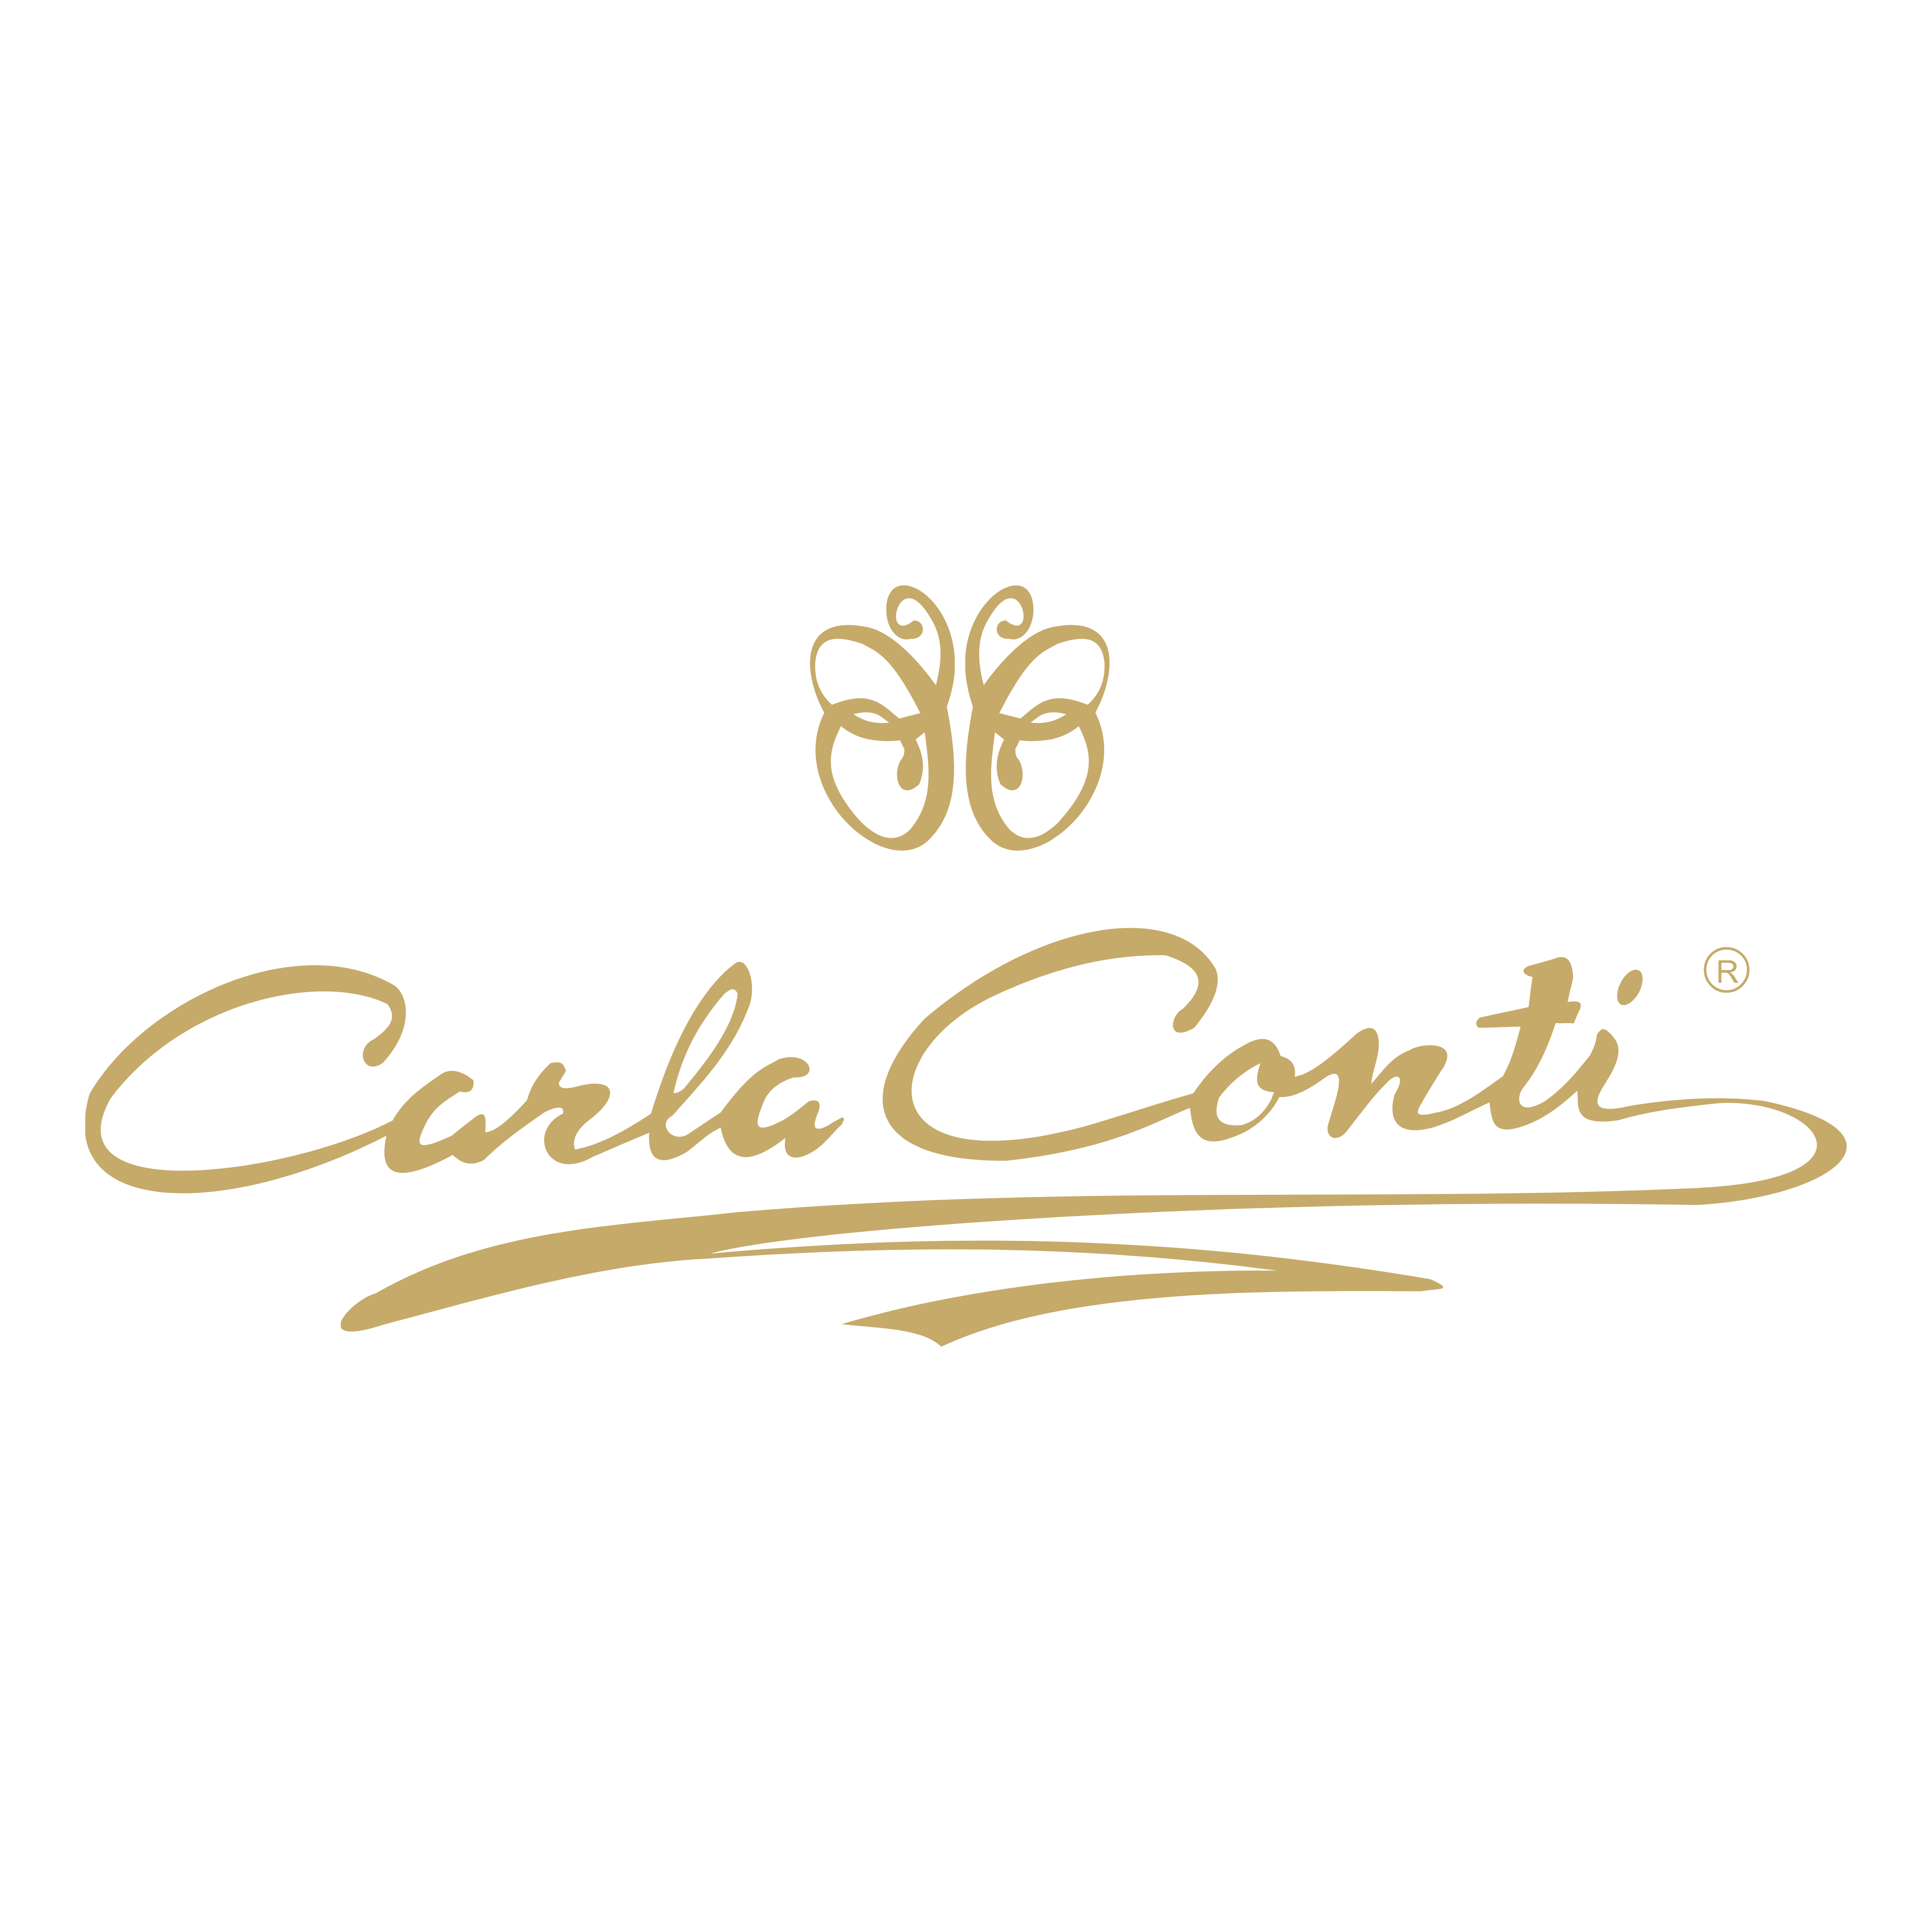 Carla Logo - Carla Conti – Logos Download